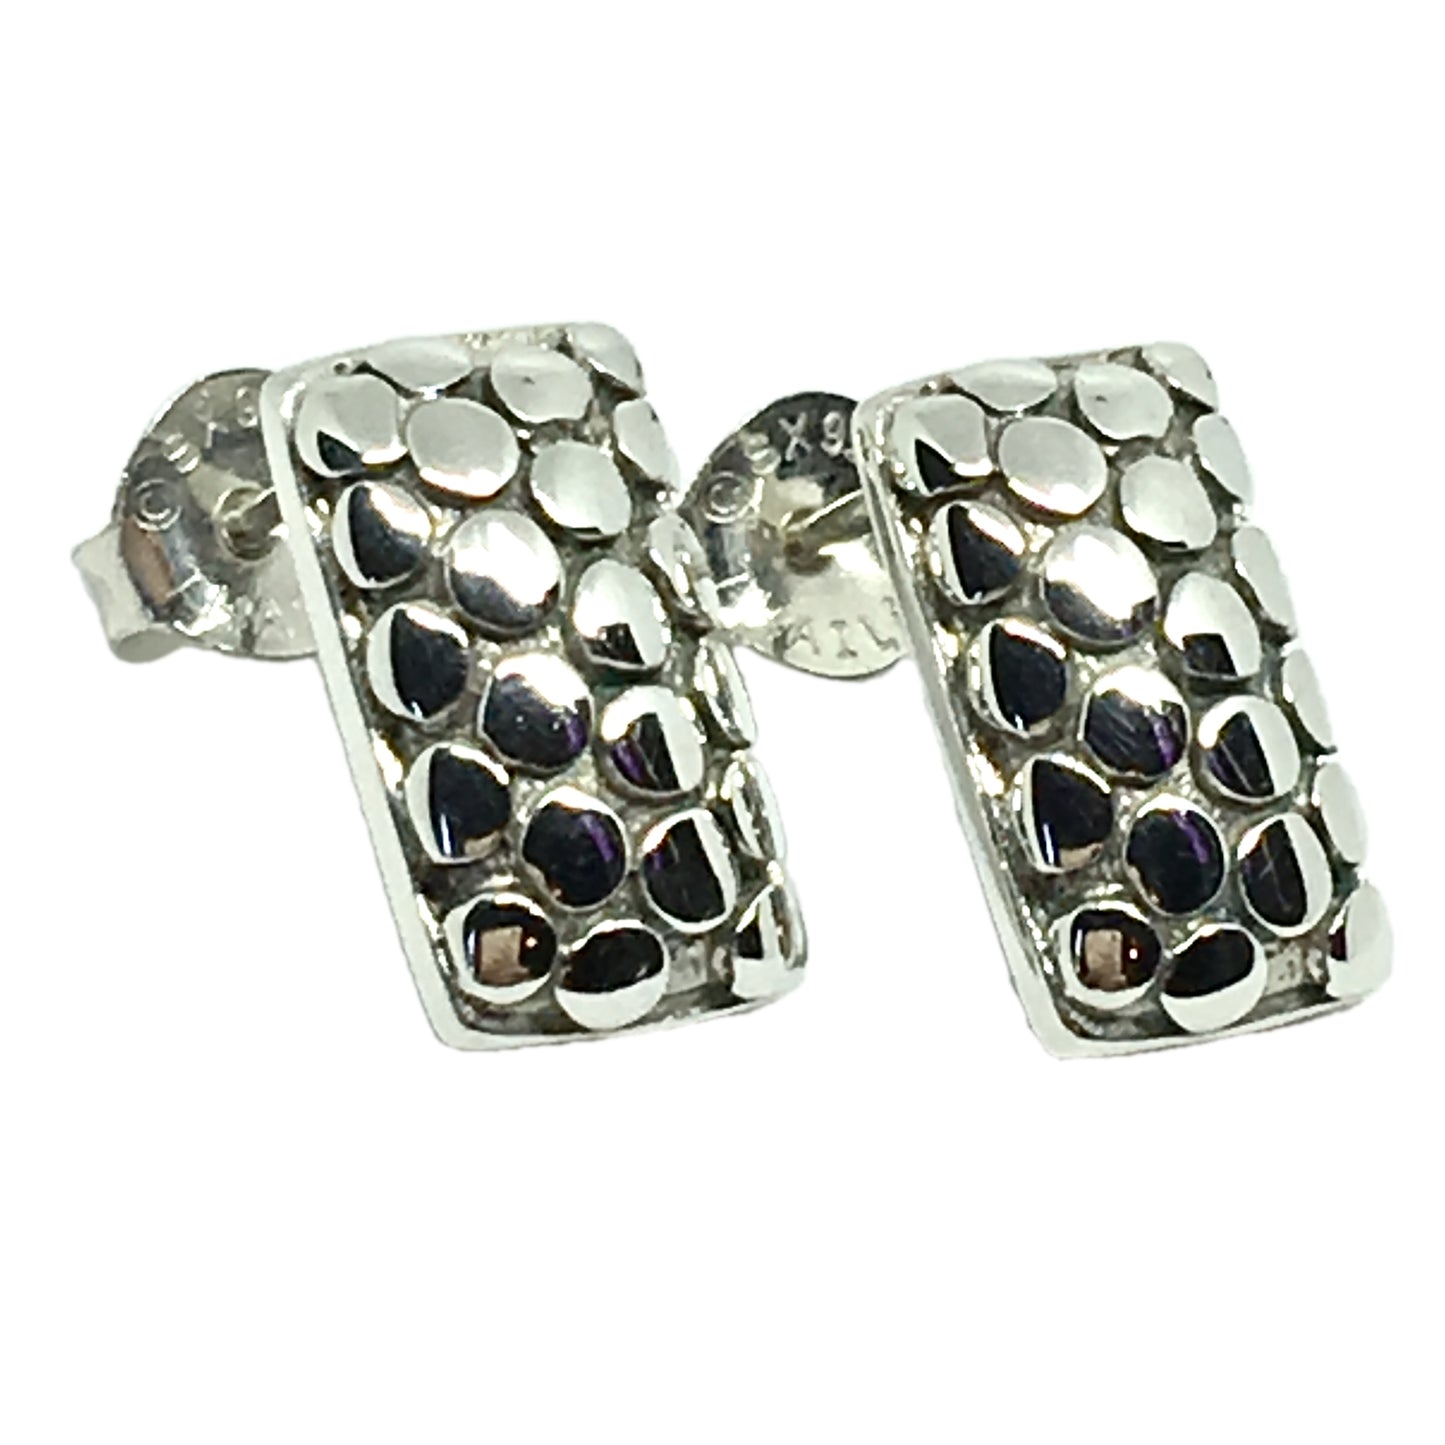 Earrings - Sterling Silver Pebble Grain Bar Earrings - Designer Modernist Style Short Drop Earrings